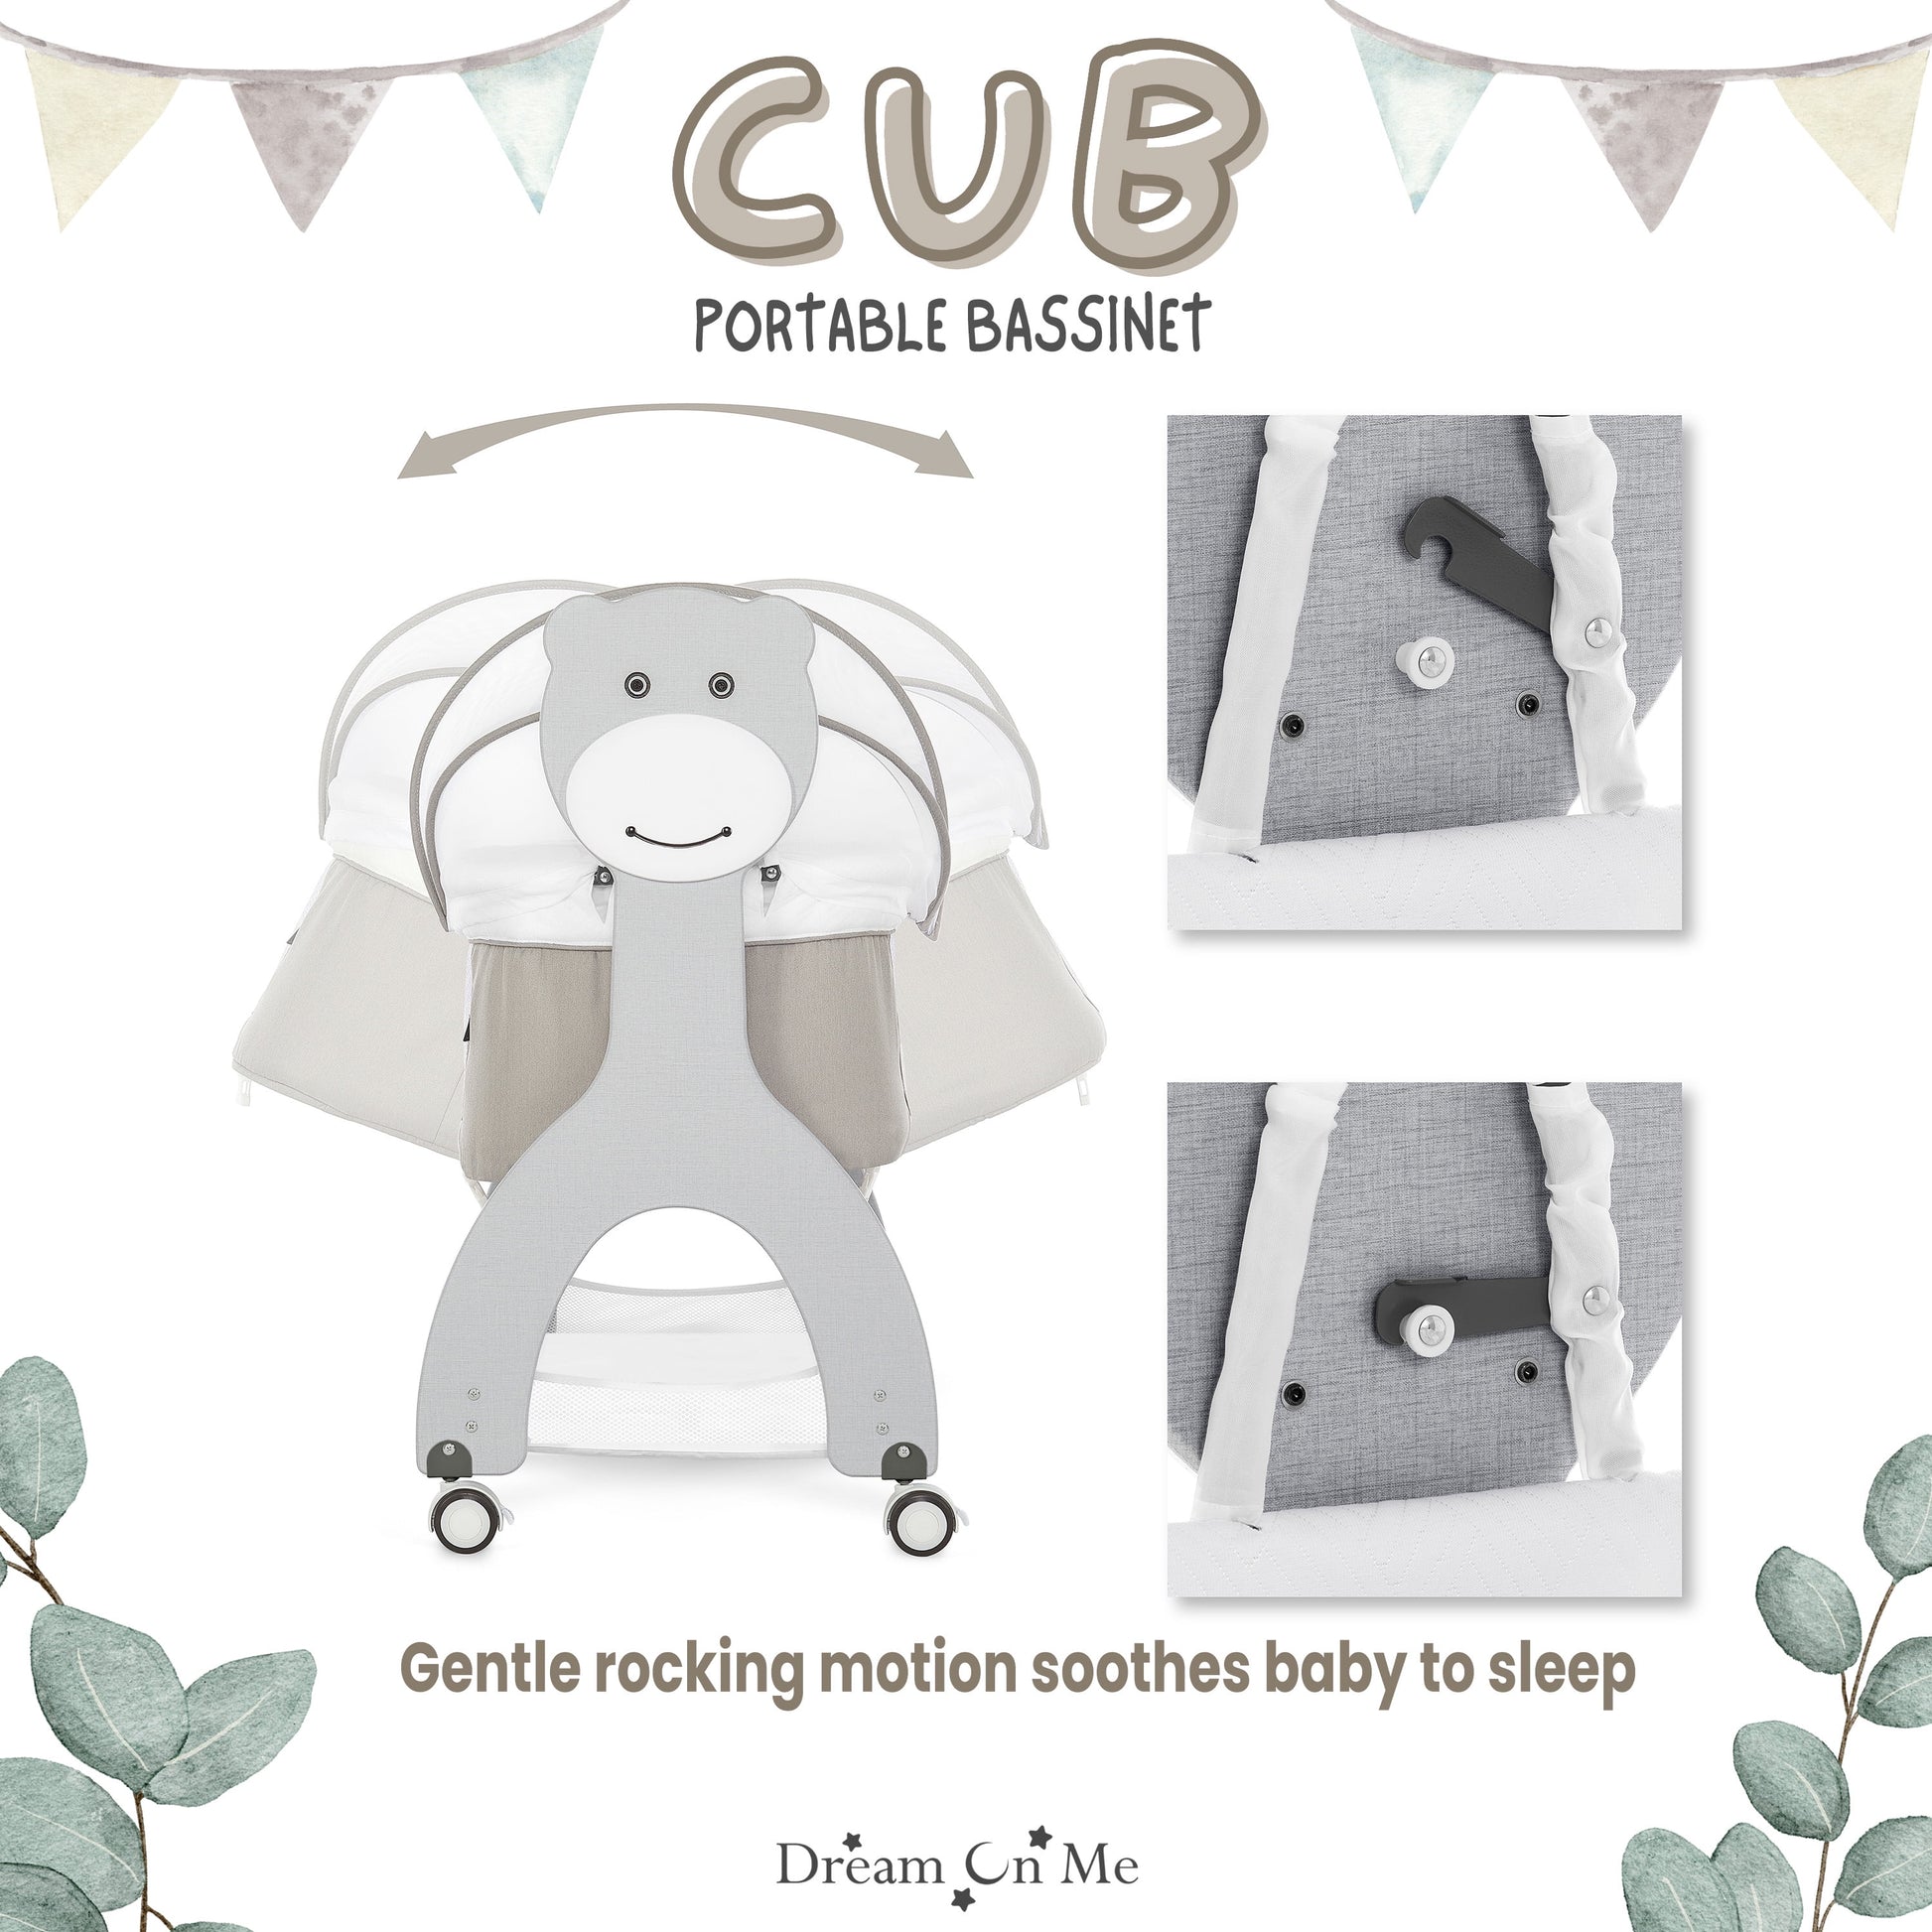 Cub Portable Bassinet in Grey, Multi-Use Baby Bassinet with Locking Wheels